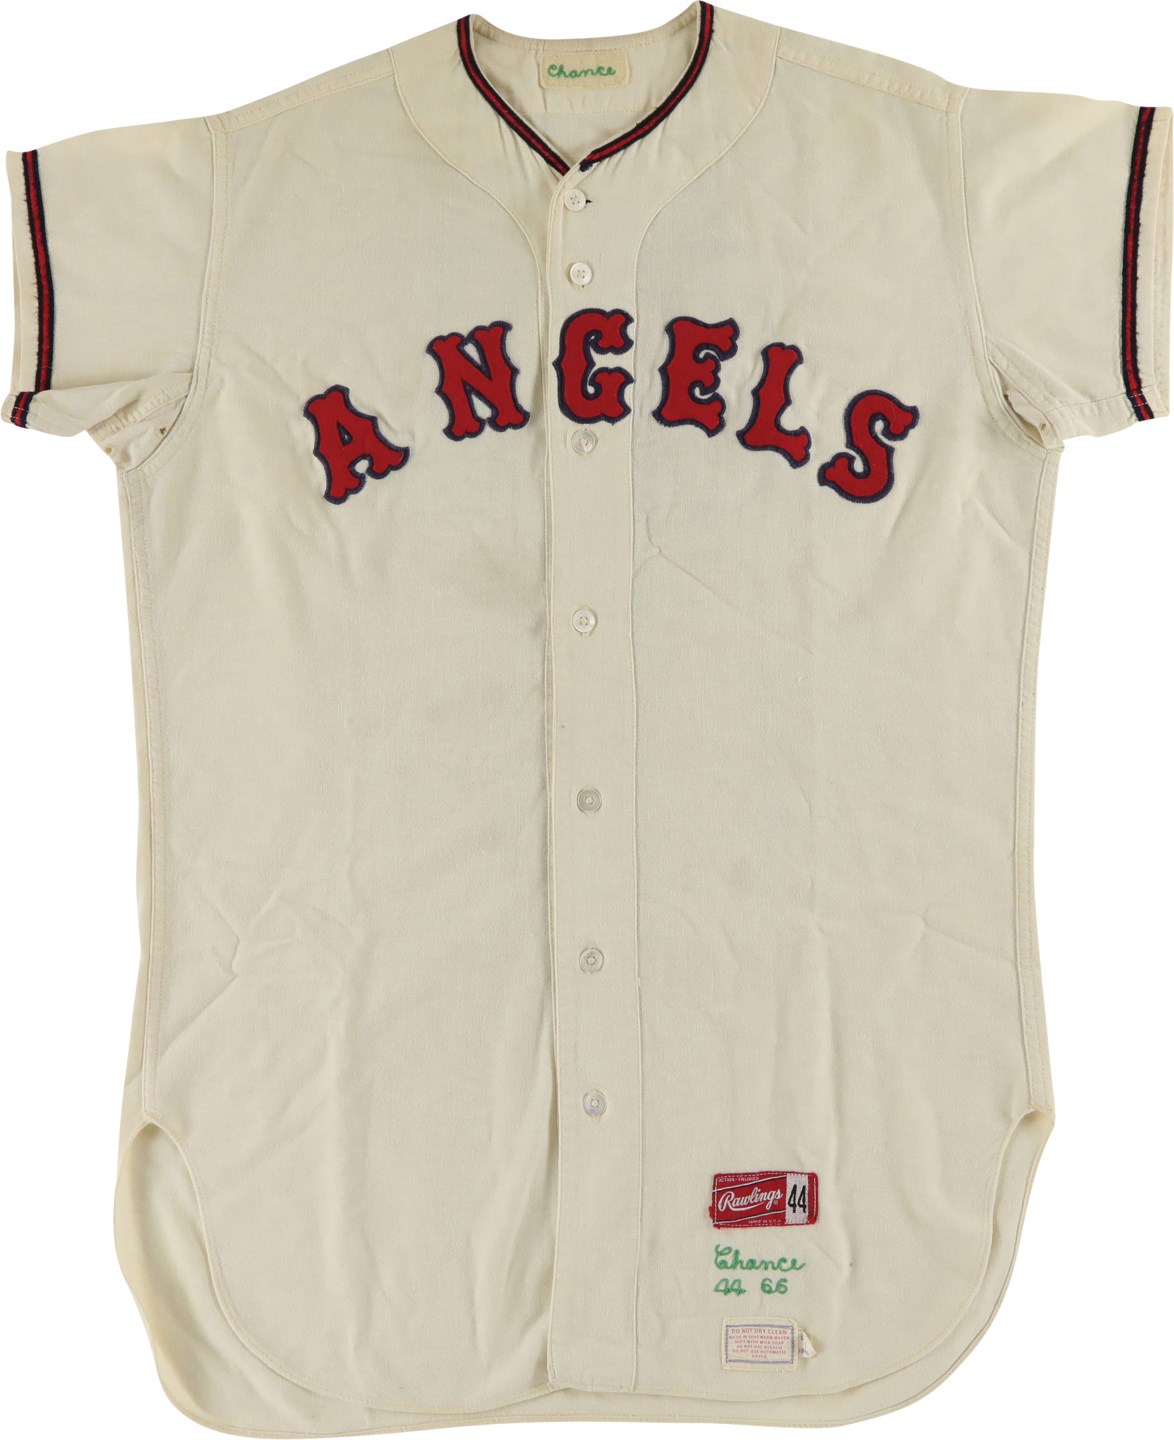 1966 Dean Chance California Angels Game Worn Jersey